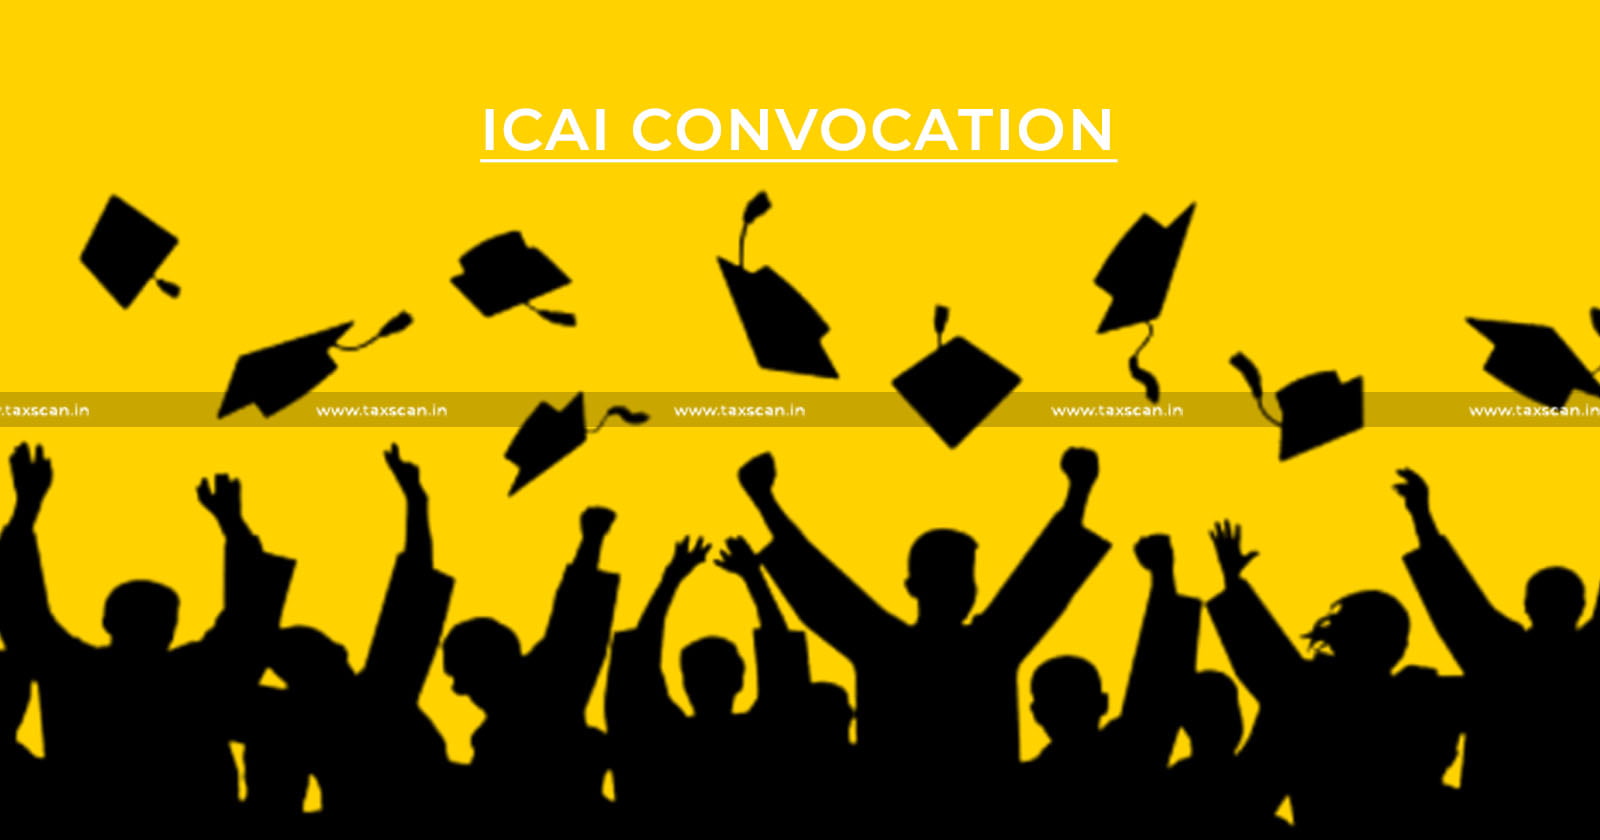 ICAI - ICAI Convocation - Convocation - taxscan